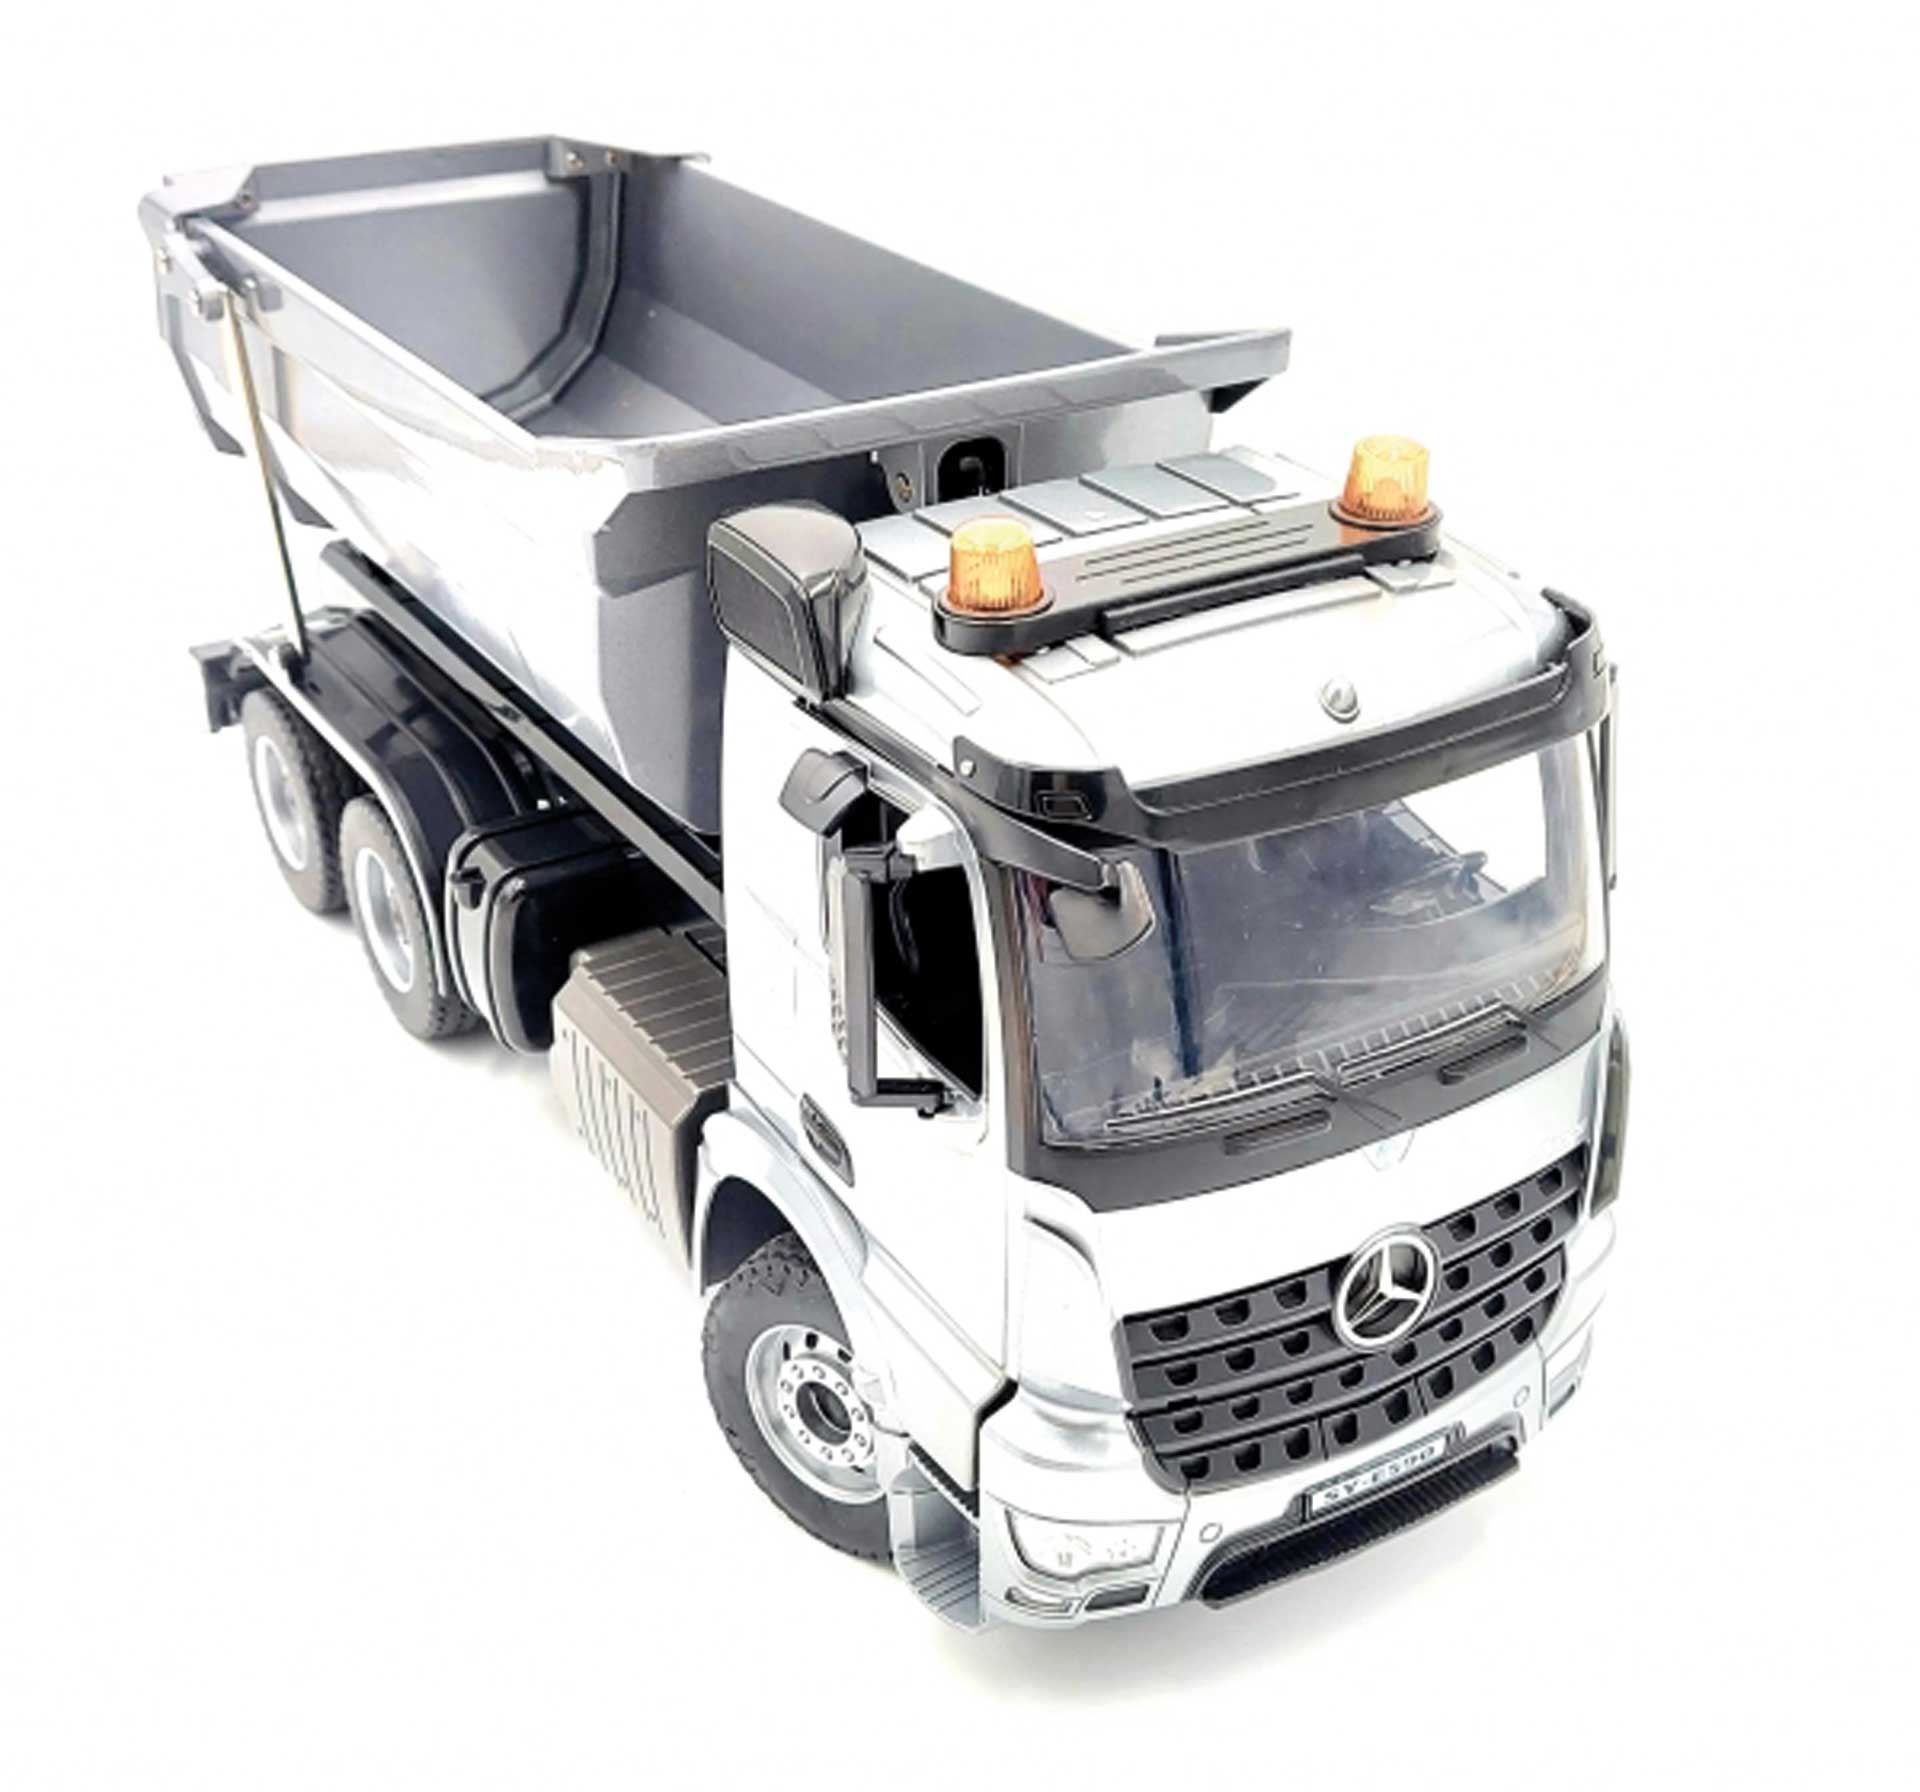 RC LKW Truck Modelle - Bausätze und RTR - bei Modellbau Lindinger